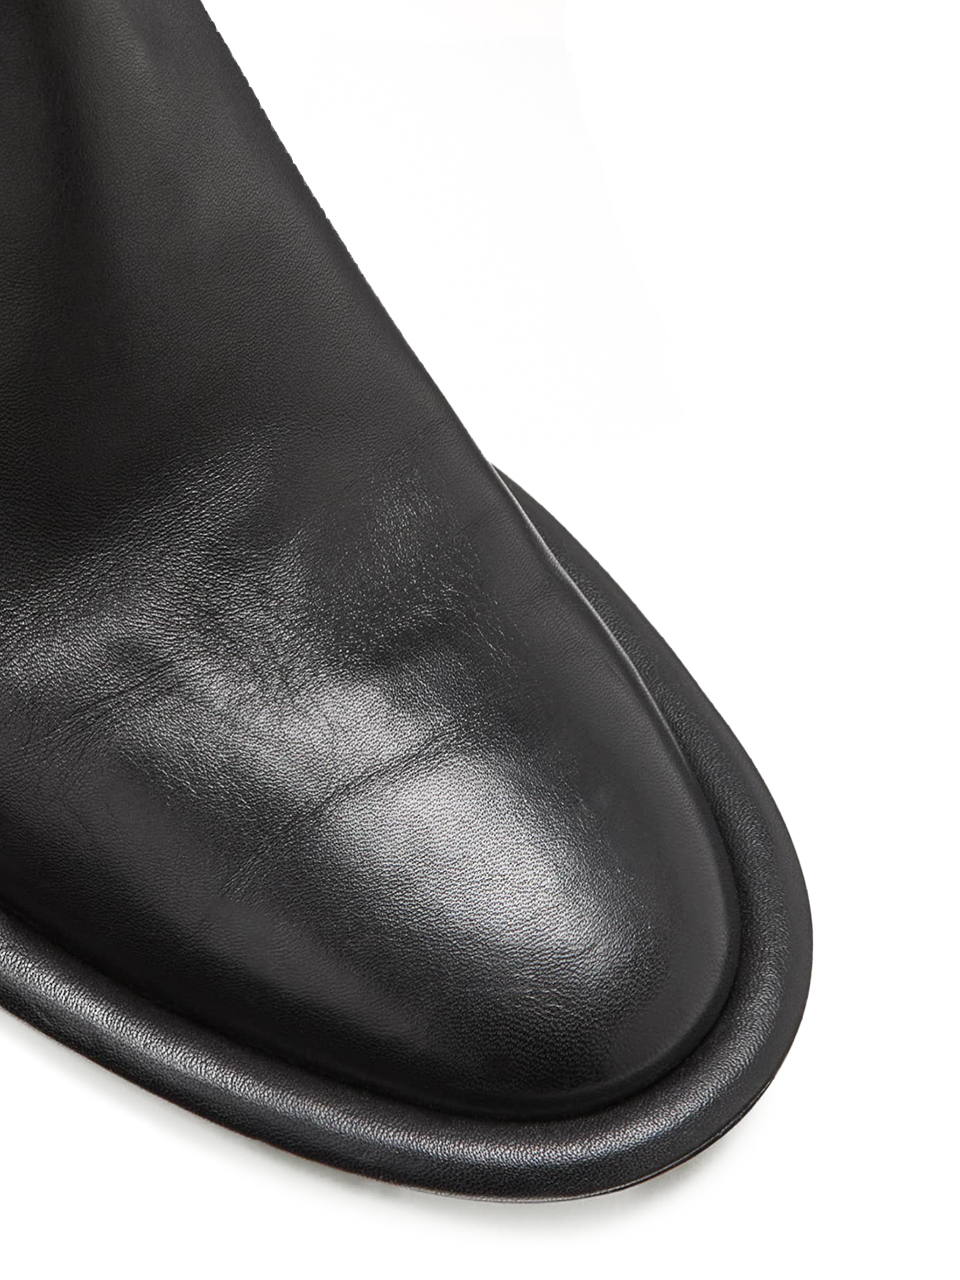 3.1 PHILLIP LIM Naomi Petite Tall Boot in Black Multi Toe Shape Detail